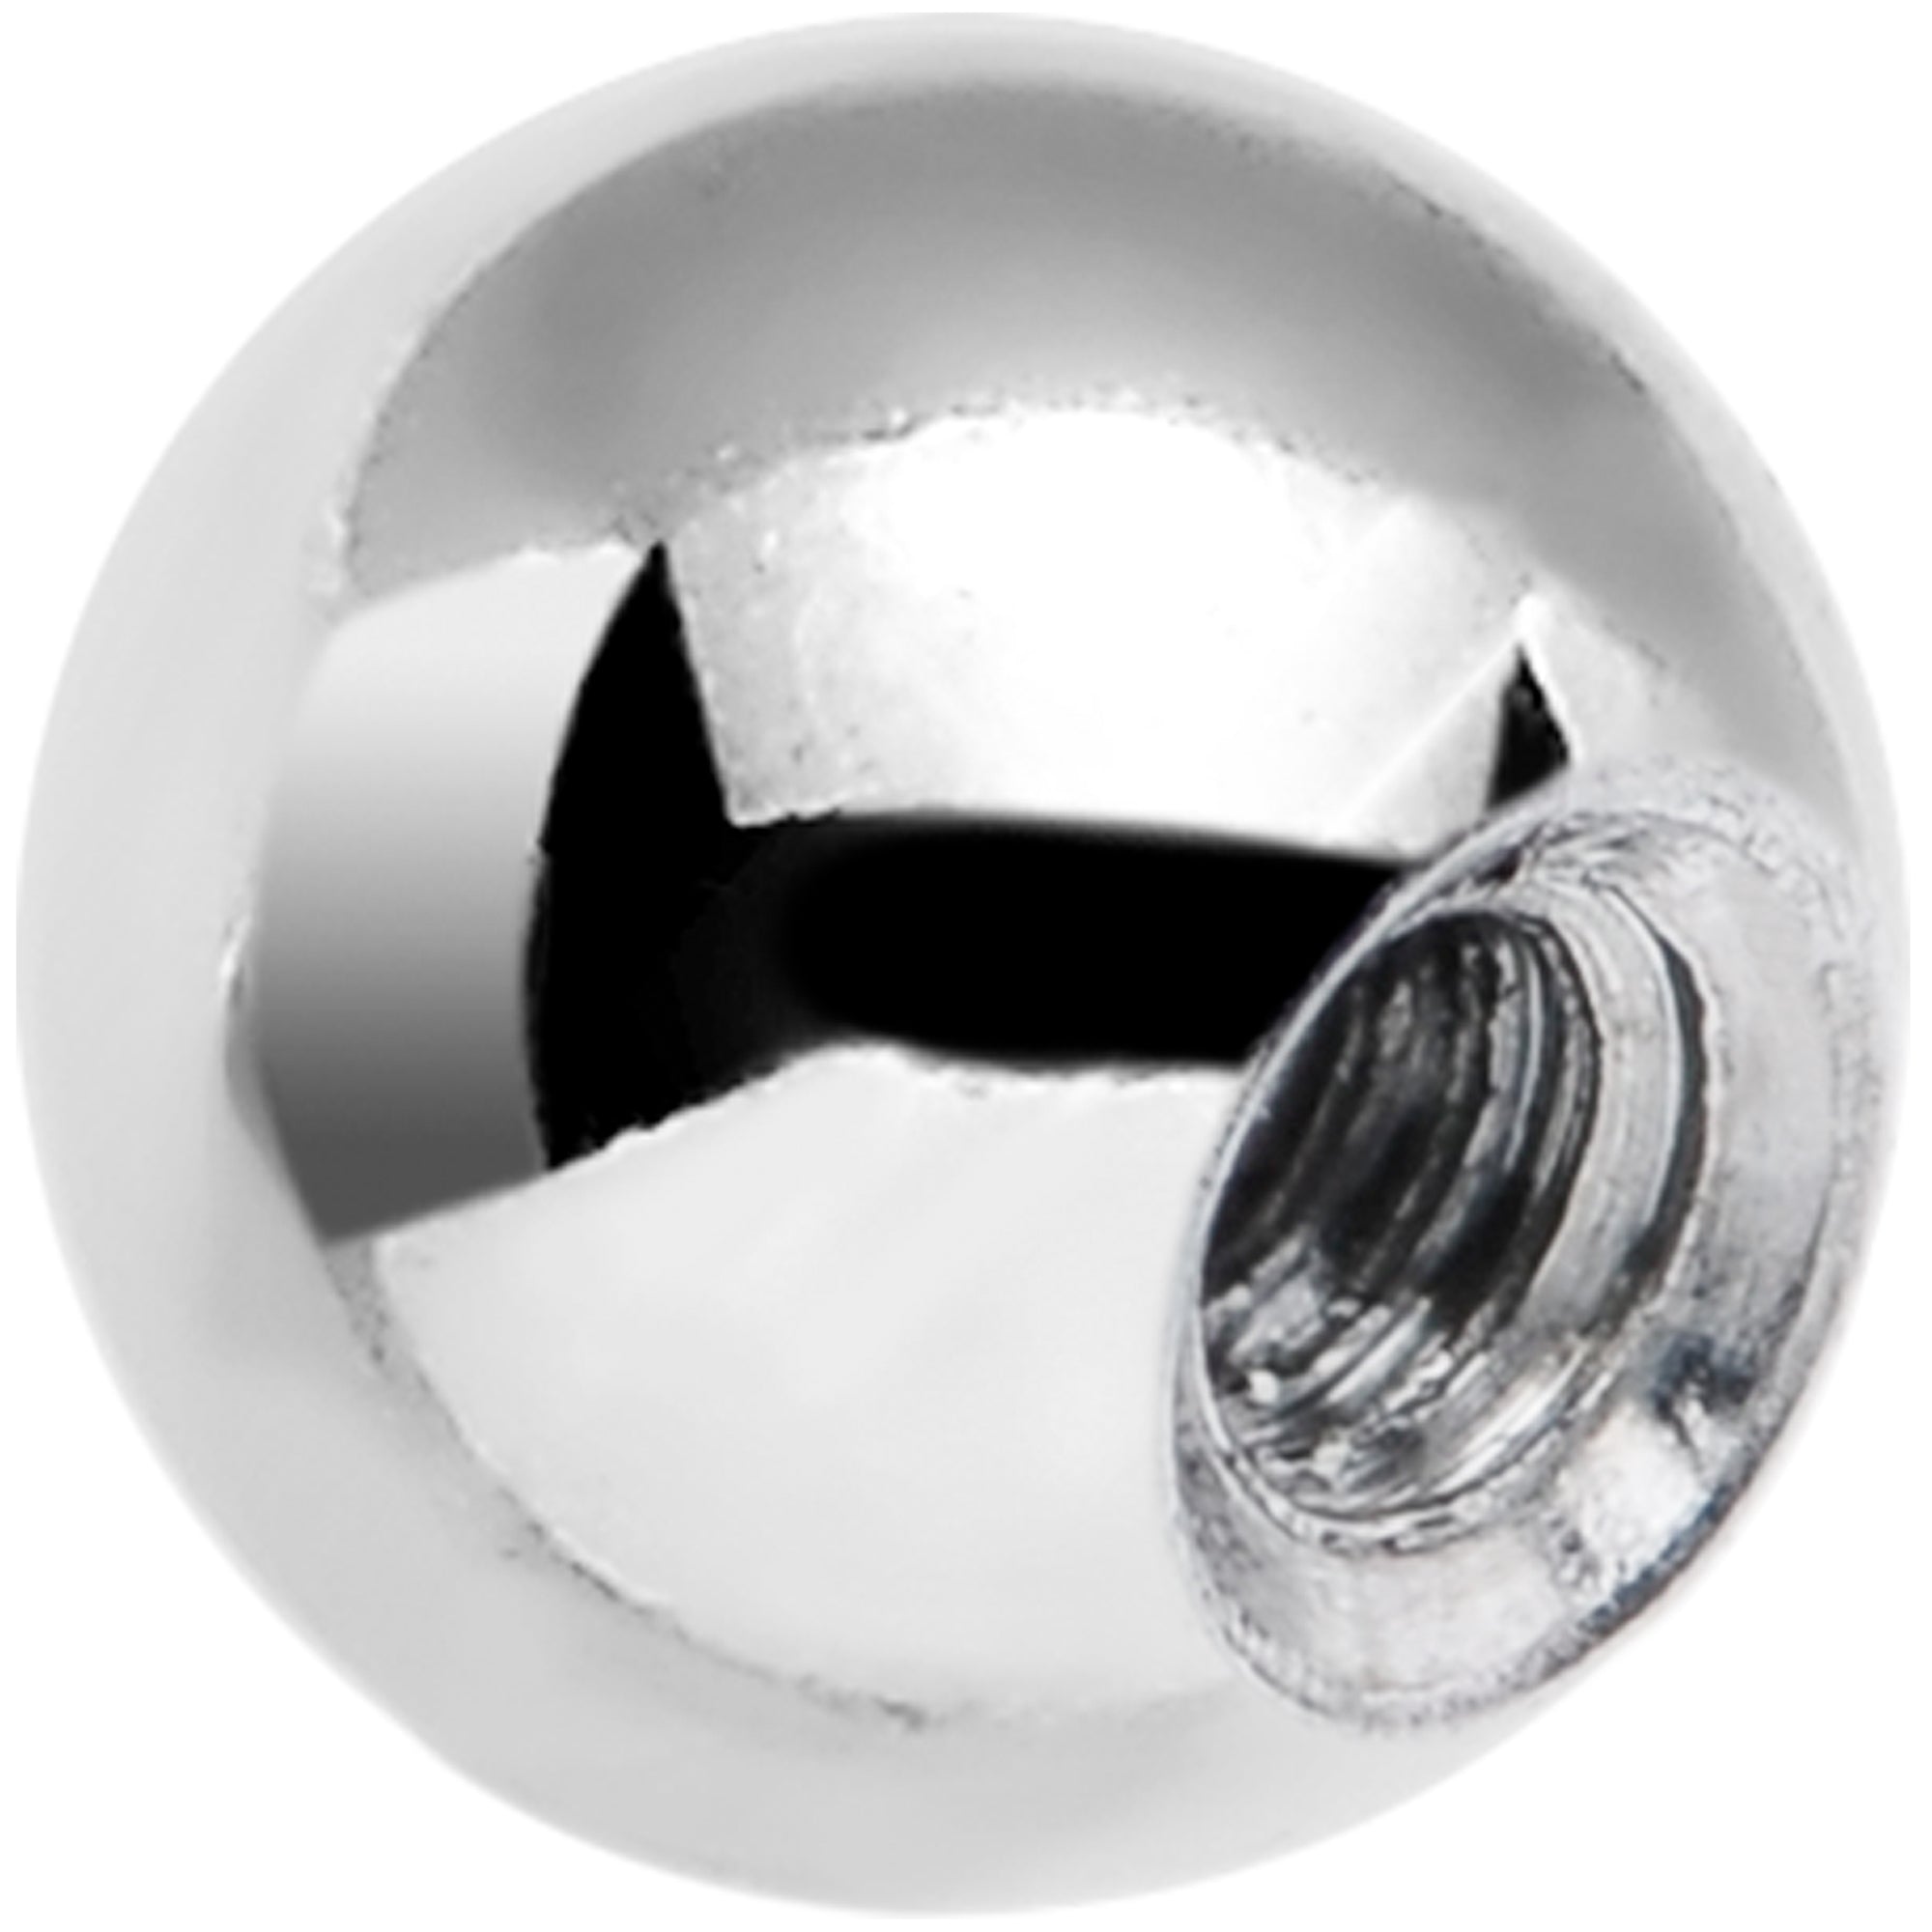 3mm Stainless Steel Aqua Gem Replacement Ball